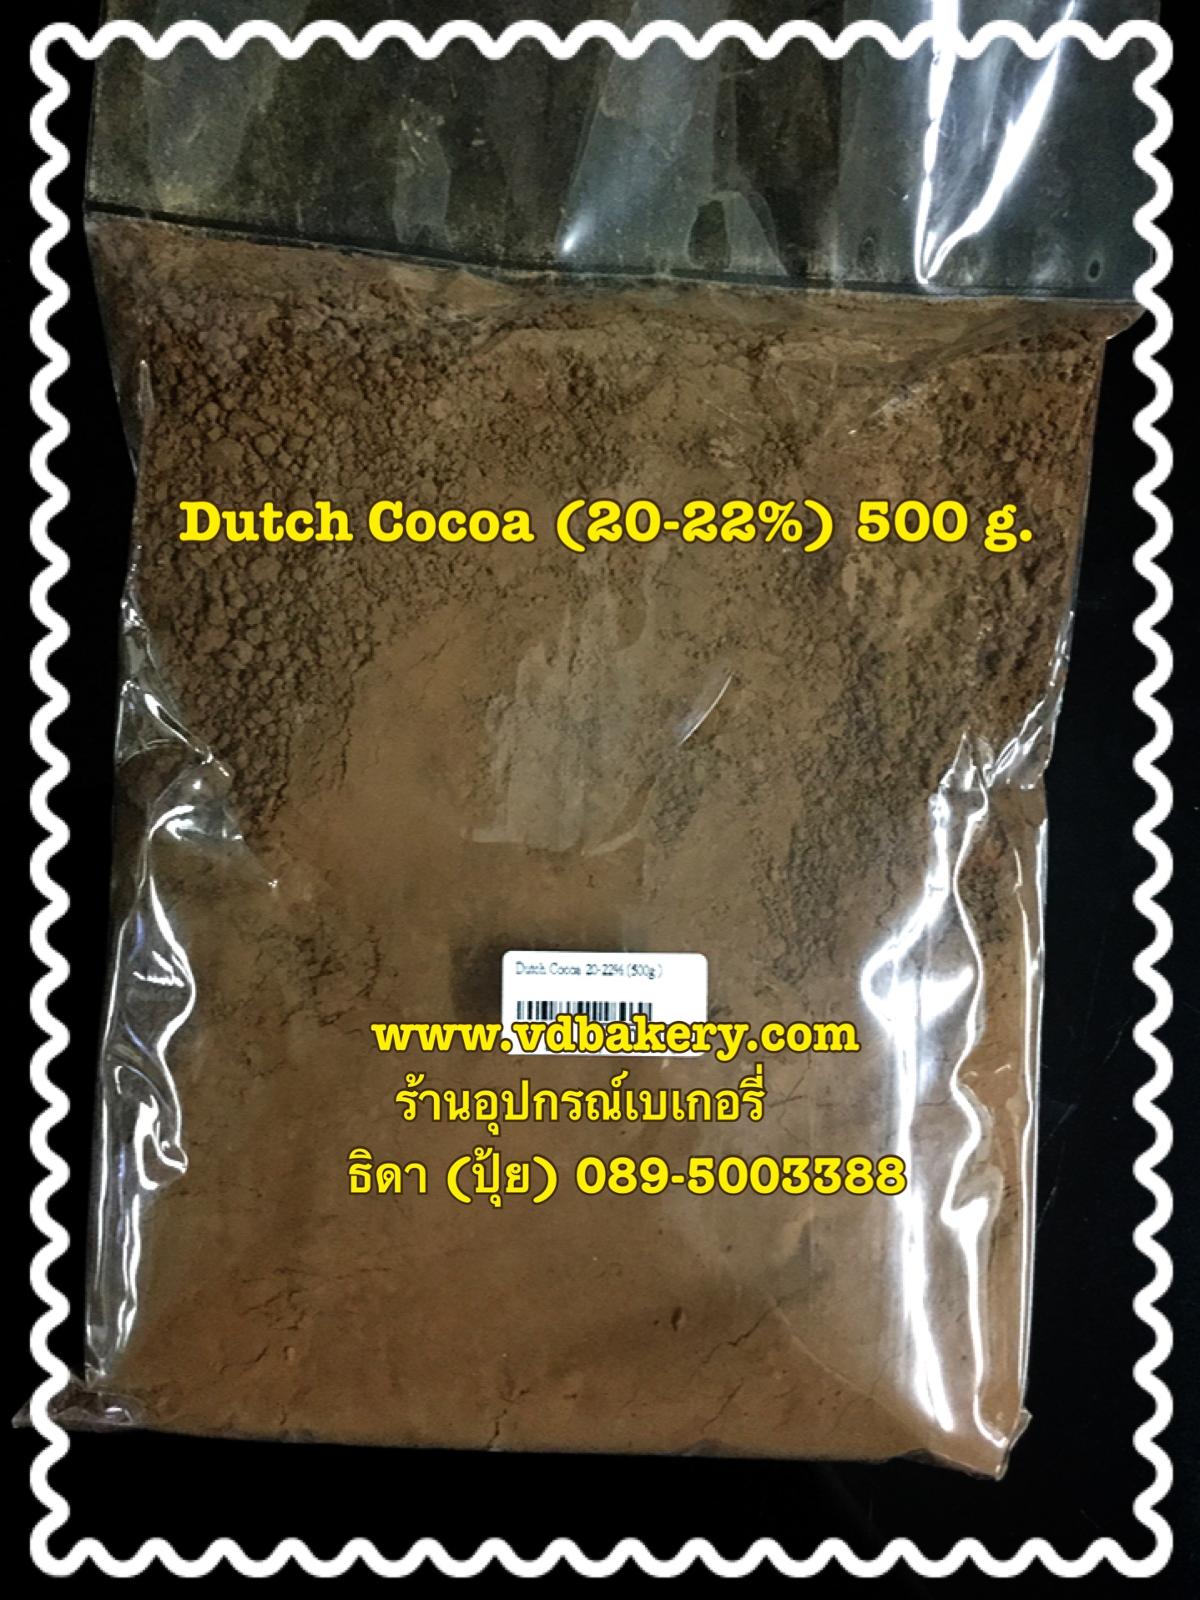 (90047) Dutch Cocoa 20-22% (500 g./ถุง)